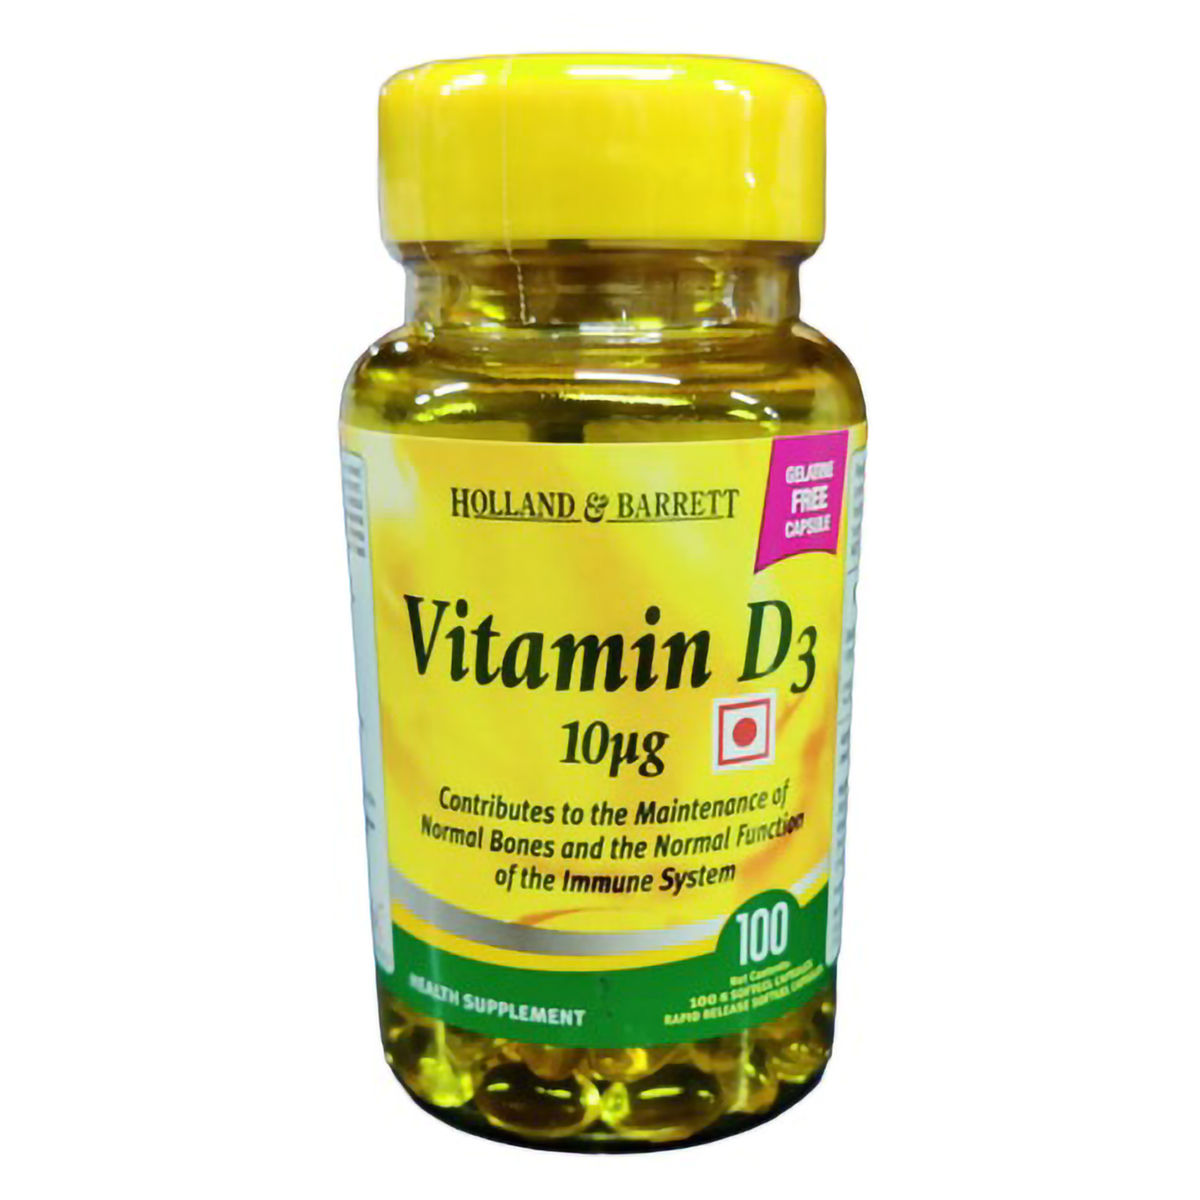 Buy Holland & Barrett Vitamin D3 10 ug, 100 Capsules Online